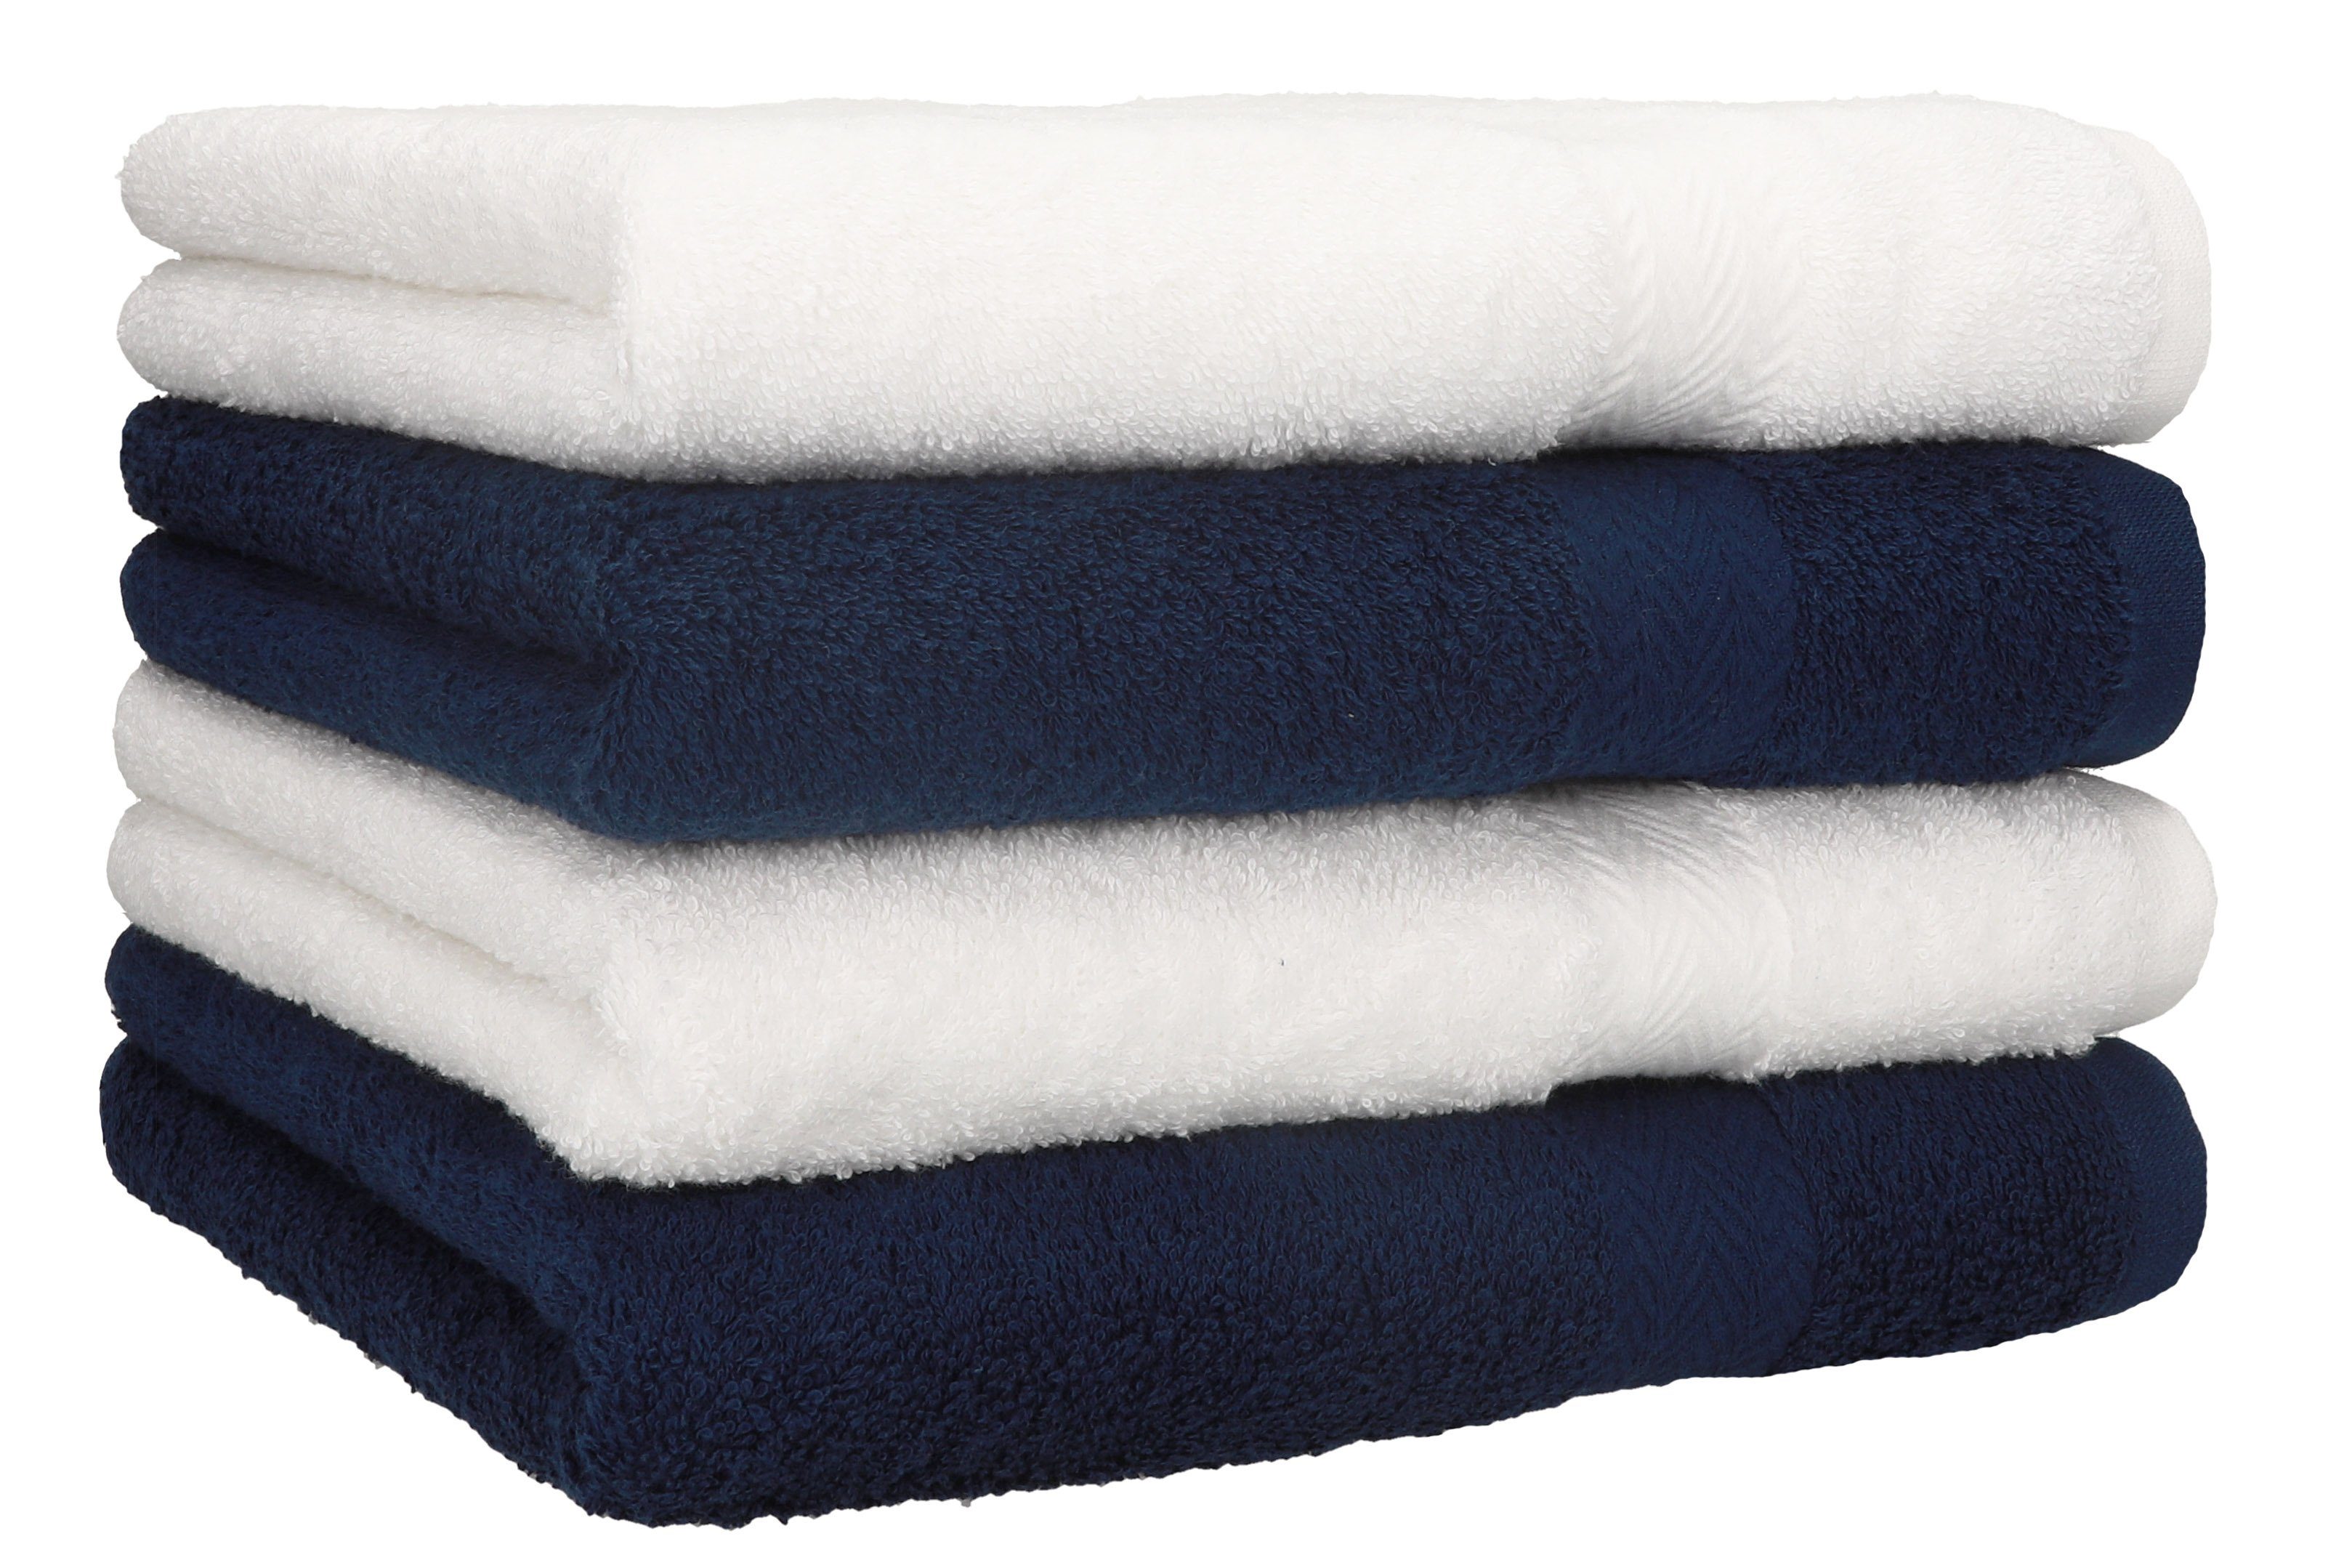 Betz Handtücher 4 dunkelblau, 100% Handtücher Baumwolle Stück 4 Handtücher weiß Farbe und Premium